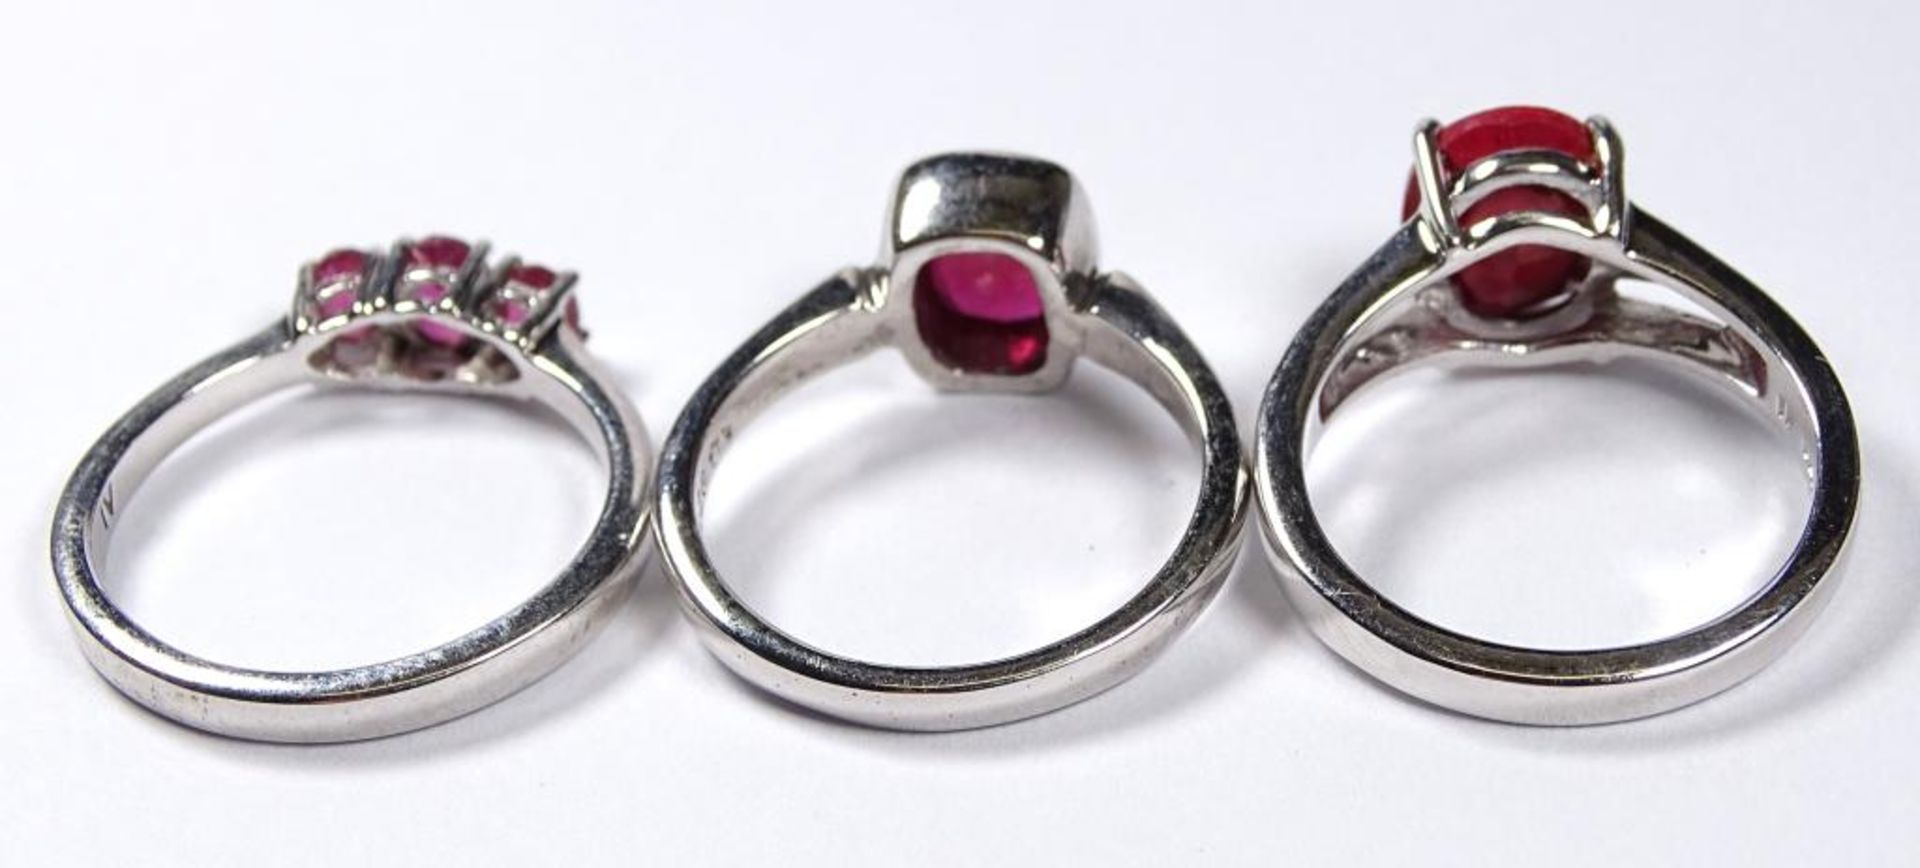 3x Rubin Ringe,Silber -925-,alle IV-gestempelt,zus.11,5gr., RG 56,59,56 - Bild 2 aus 2